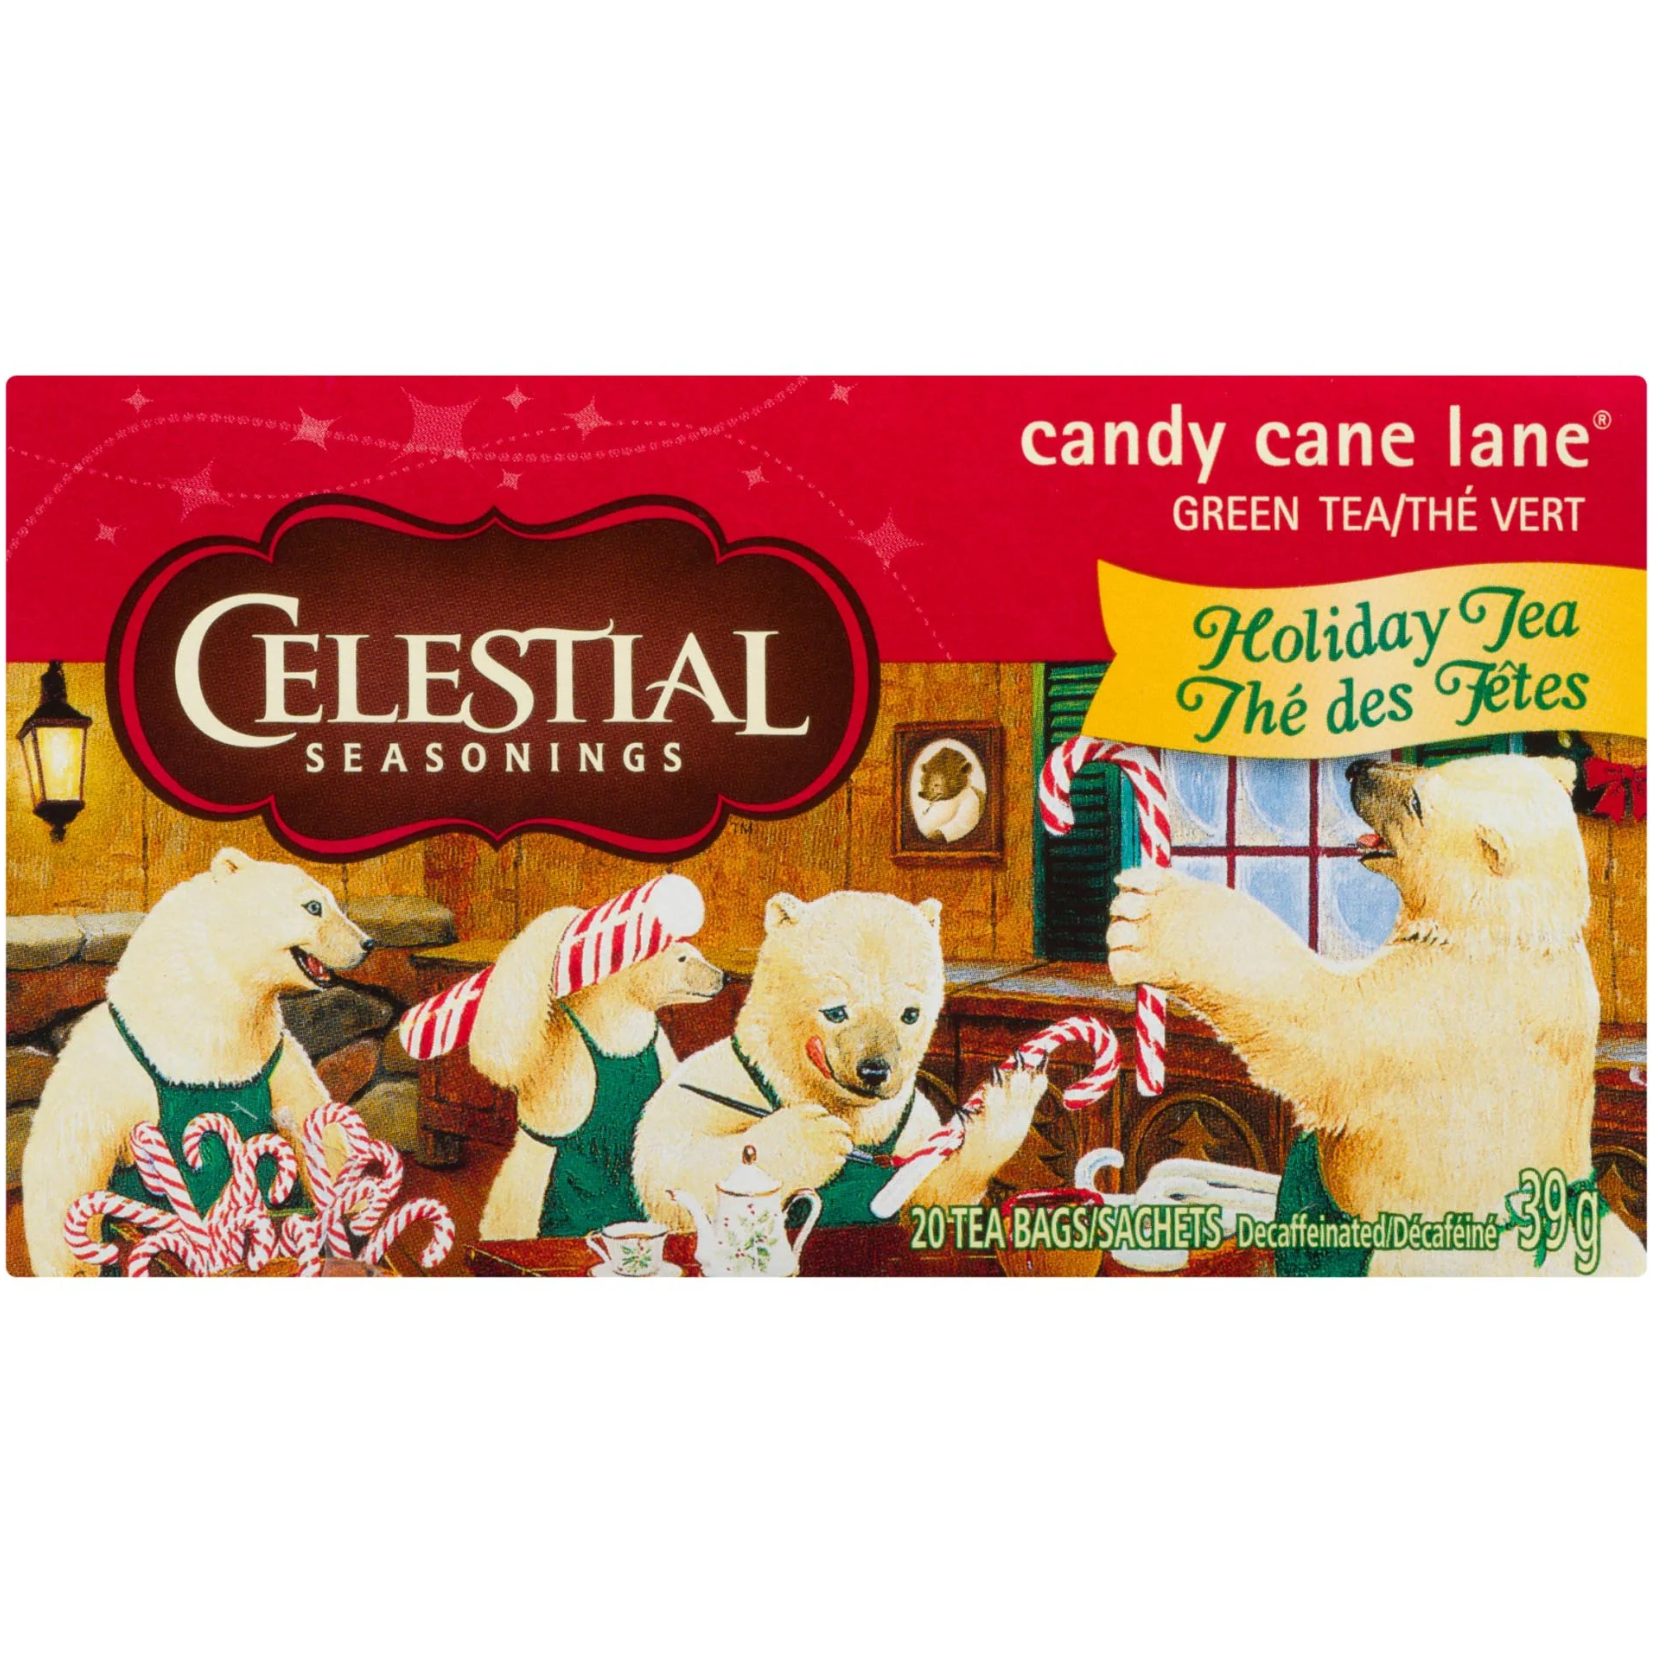 Celestial Seasonings Candy Cane Lane Tea 39g